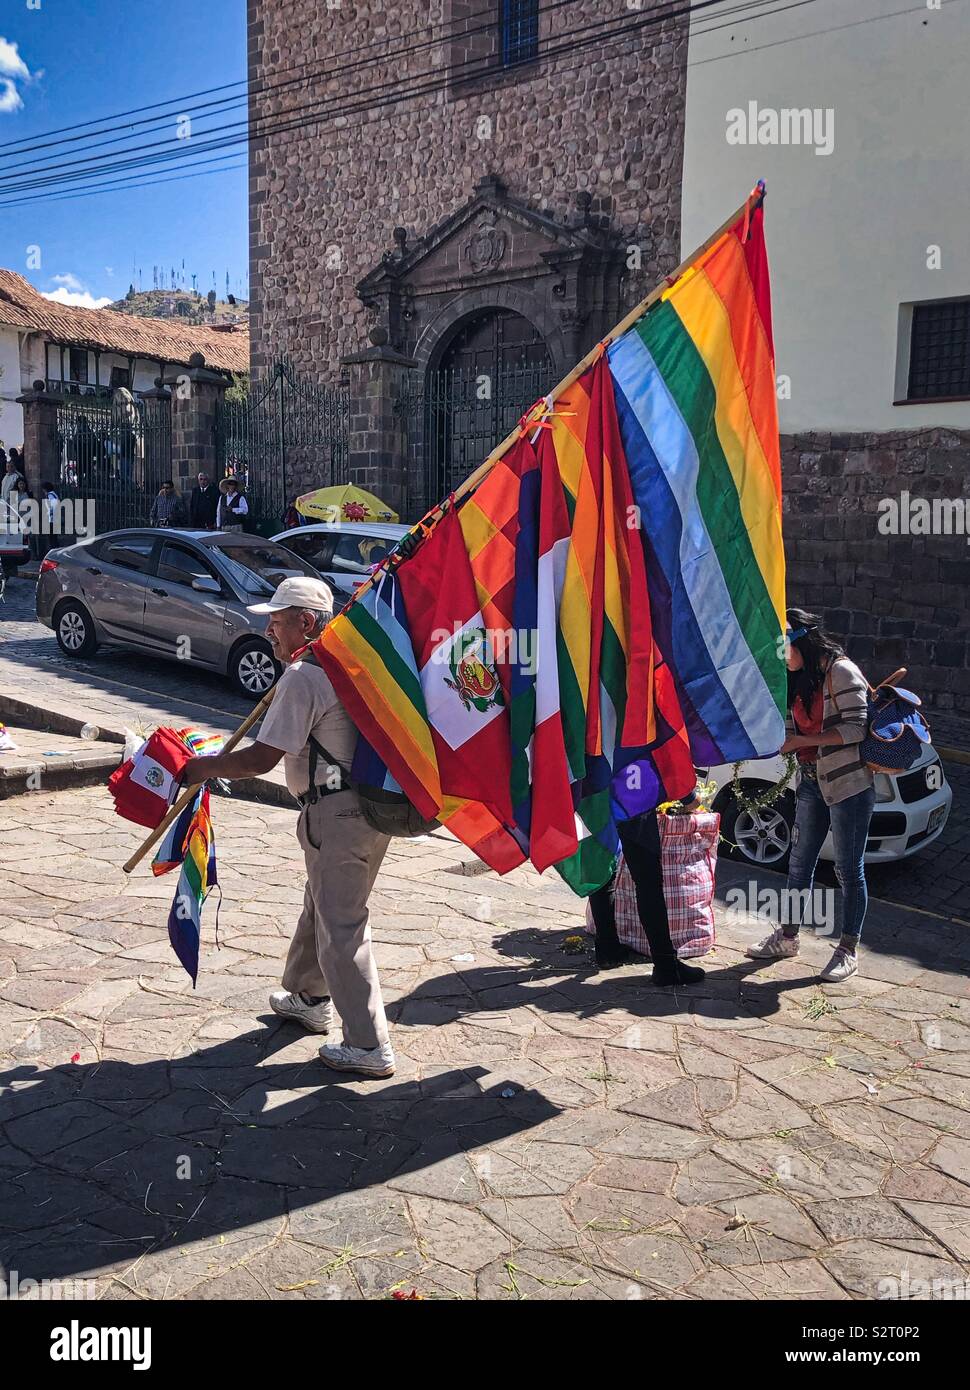 Flag seller carrying flags in Cusco Cuzco Perú Peru. Cusconian flag looks like gay pride flag. Stock Photo